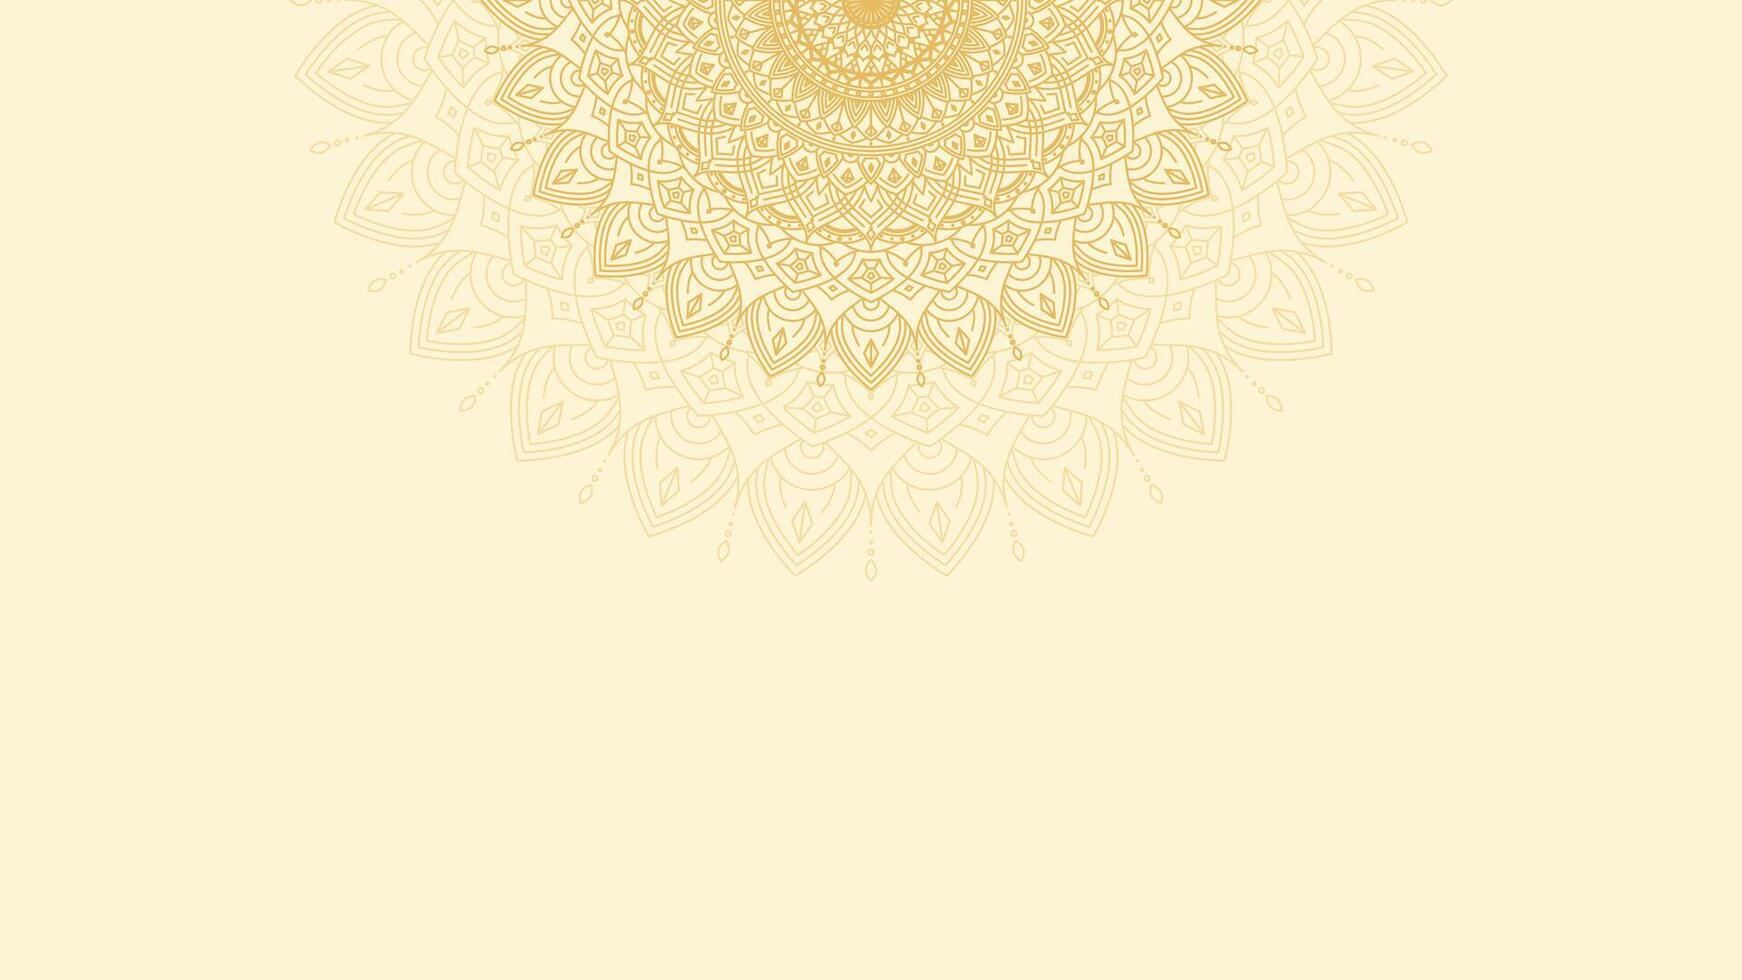 Shimmering Gold Blank Horizontal Vector Background with Ornamental Mandala Elements